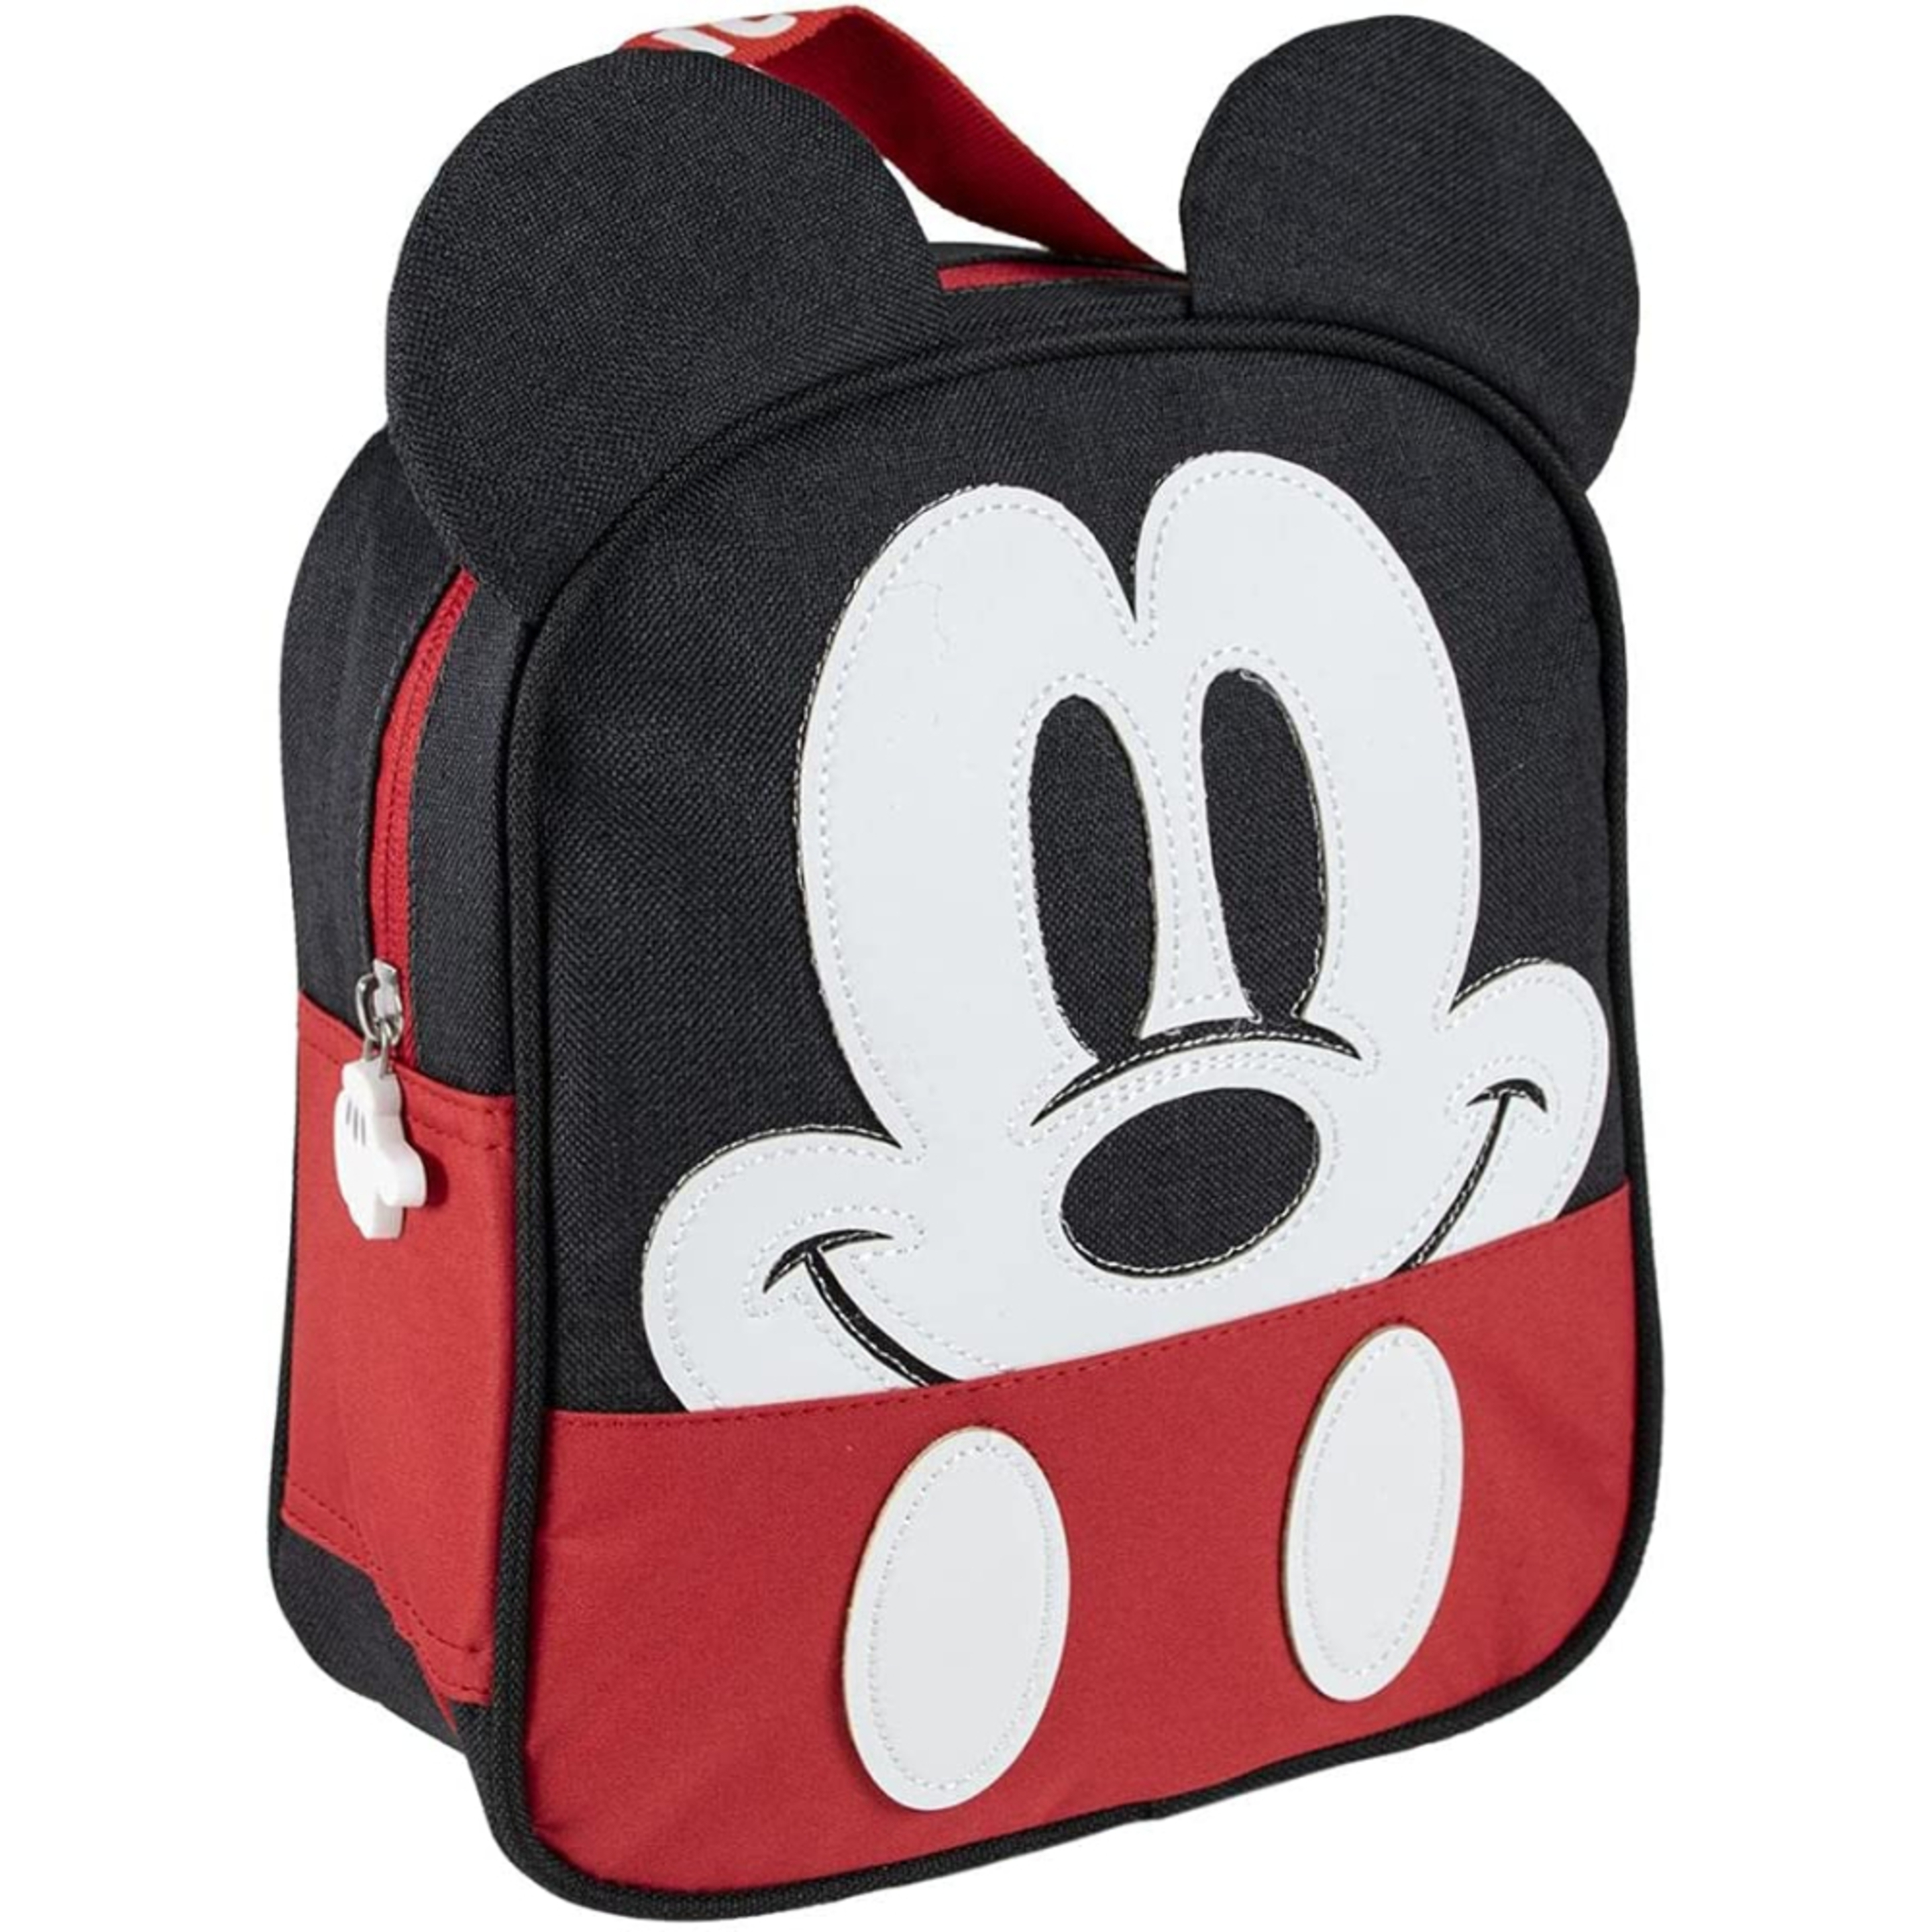 Bolsa Portaalimentos Mickey Mouse 72518 - rojo - 